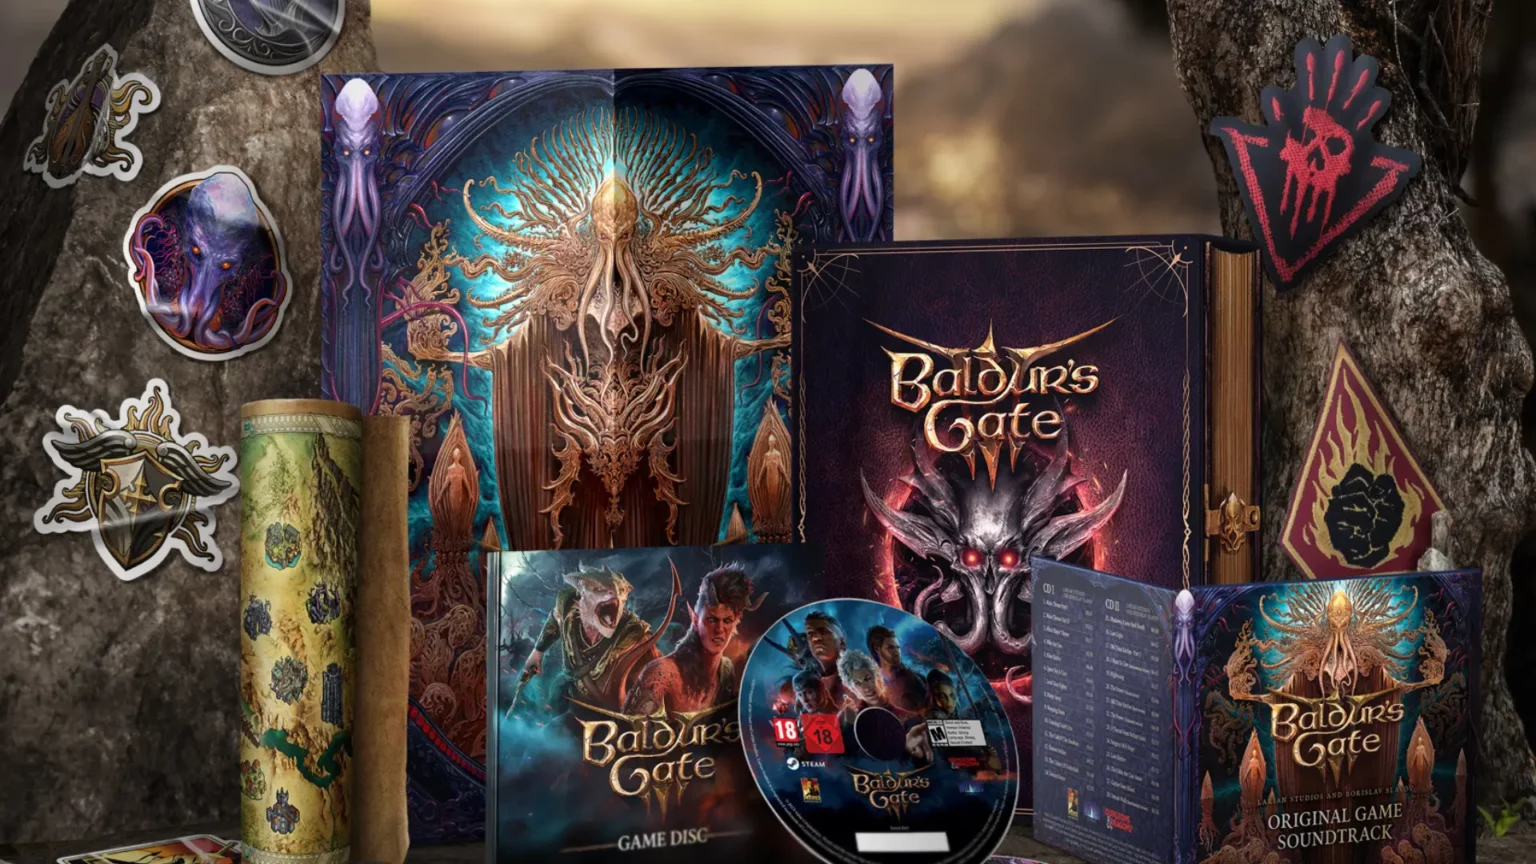 Baldur’s Gate 3 Physical Edition For Consoles Delayed - - News | | GamesHorizon